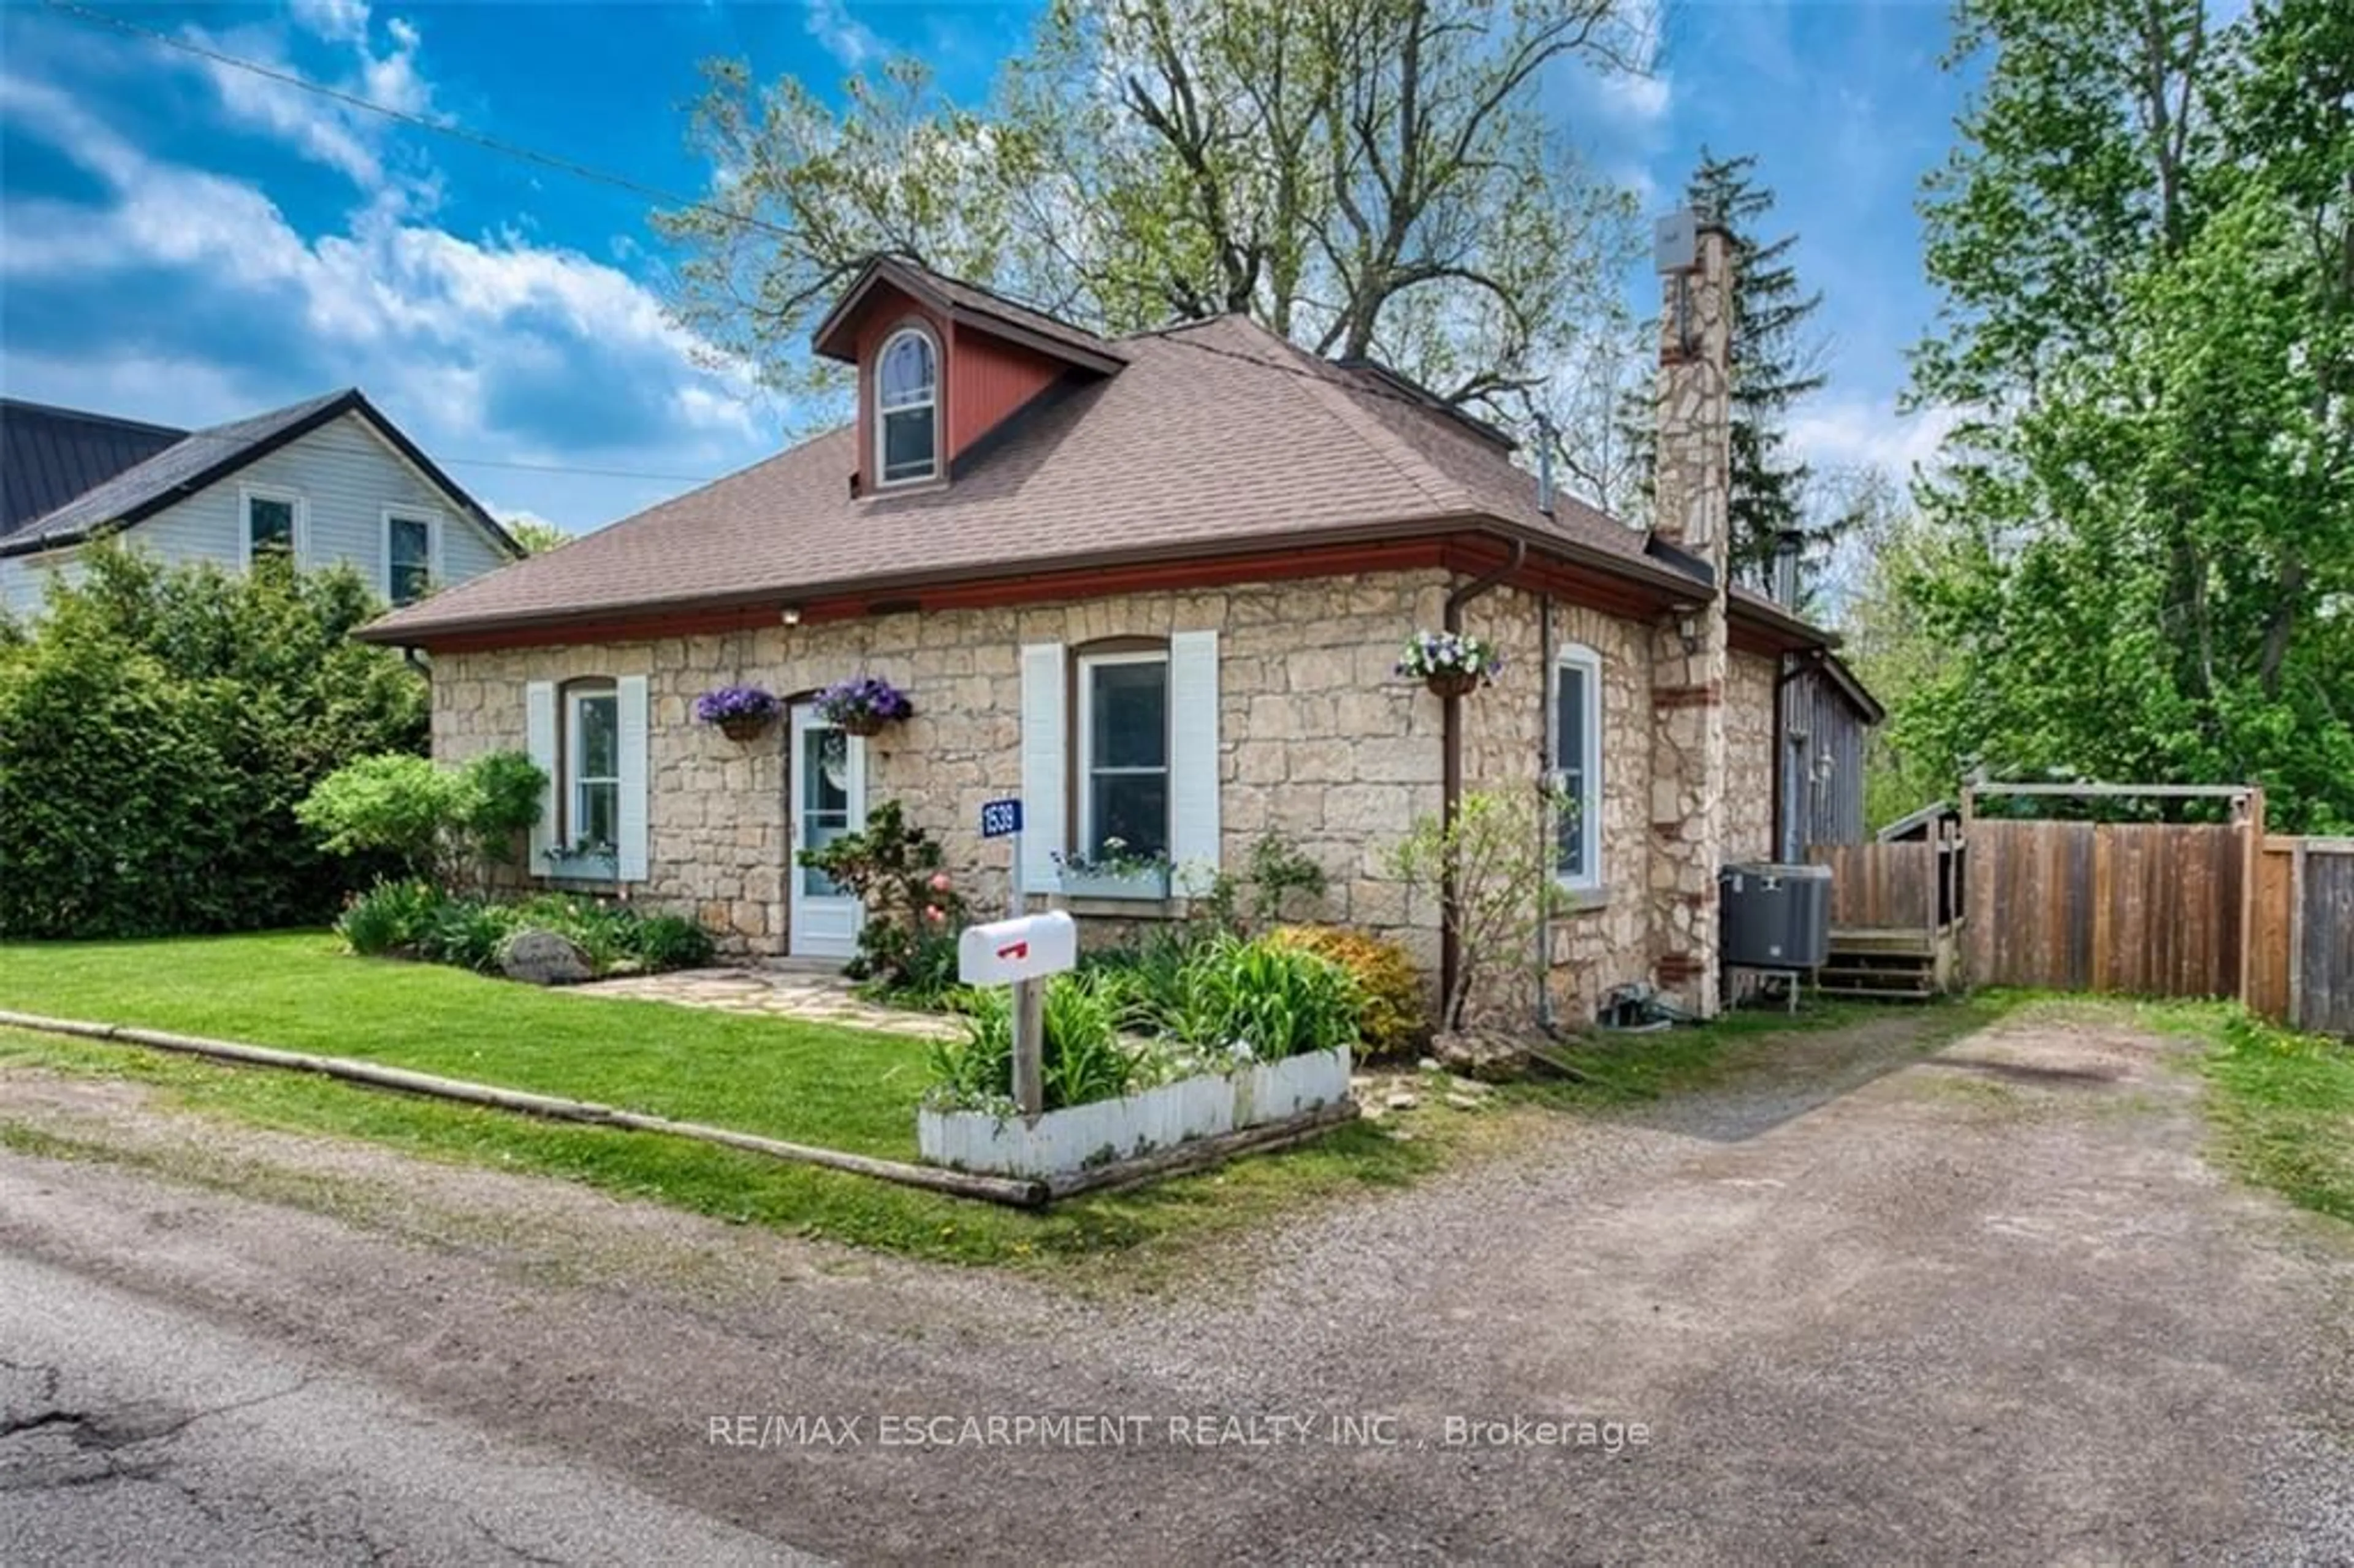 Home with brick exterior material for 1539 Brock Rd, Hamilton Ontario L9H 5E4